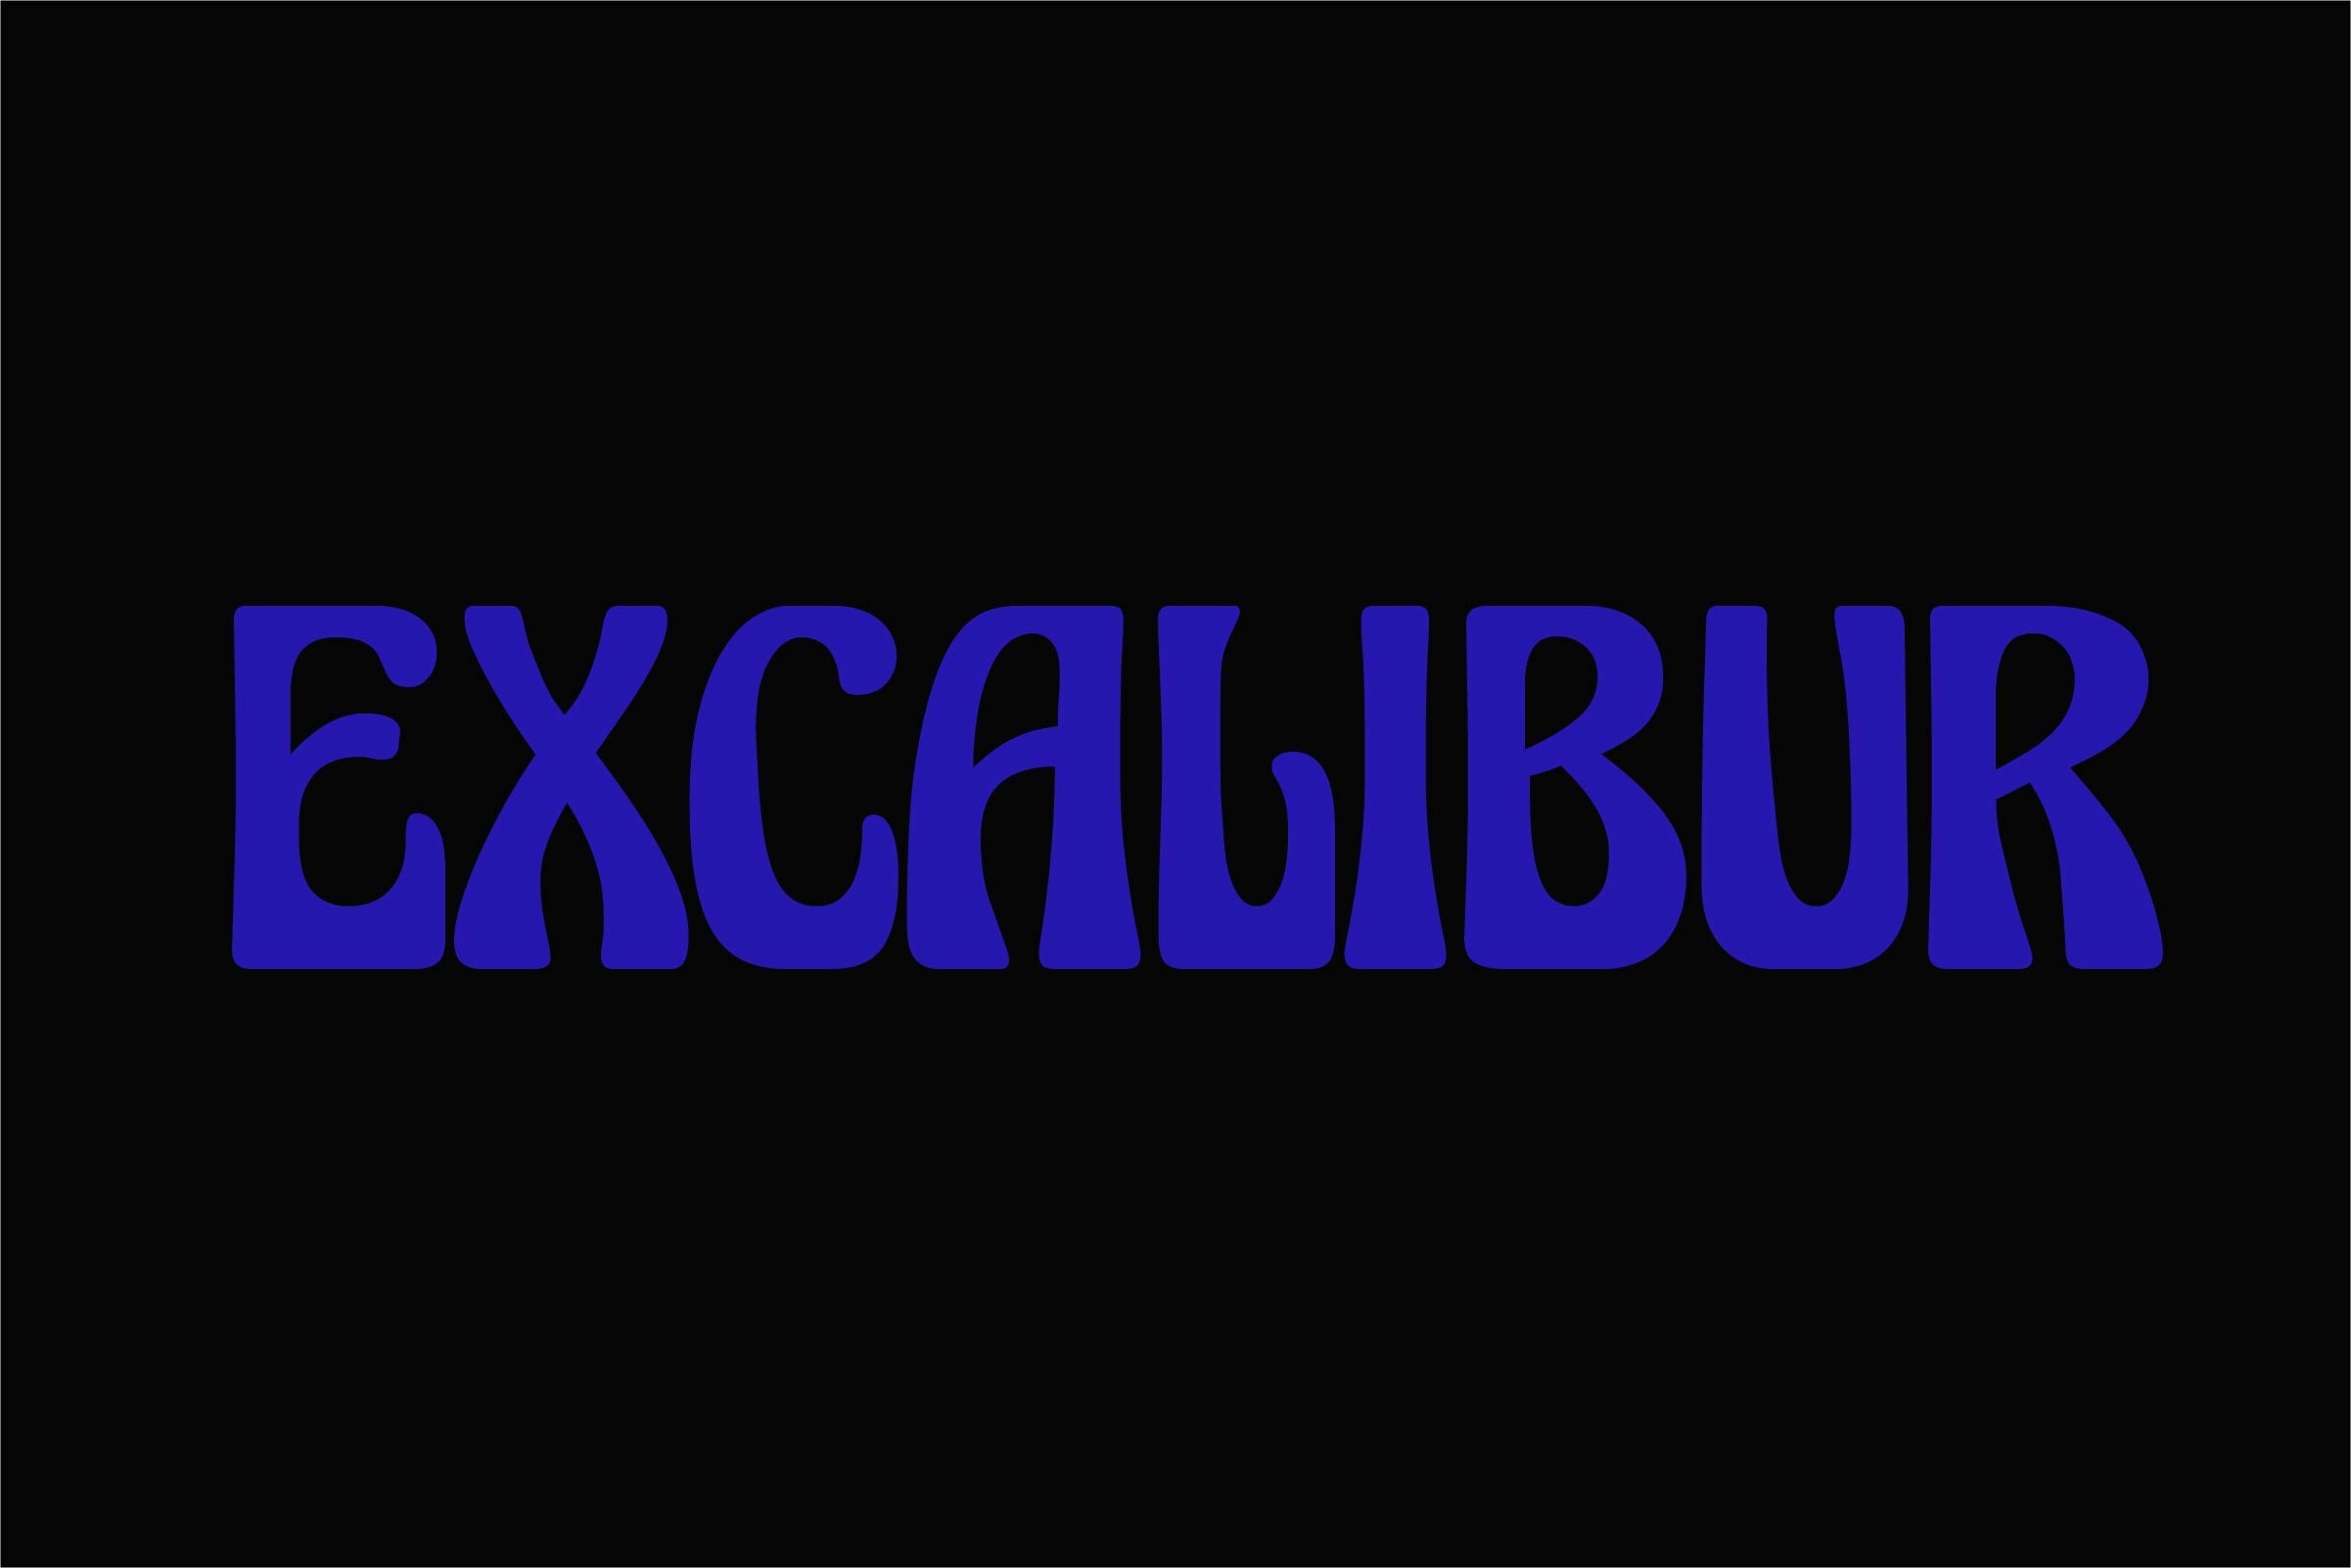 Font Excalibur